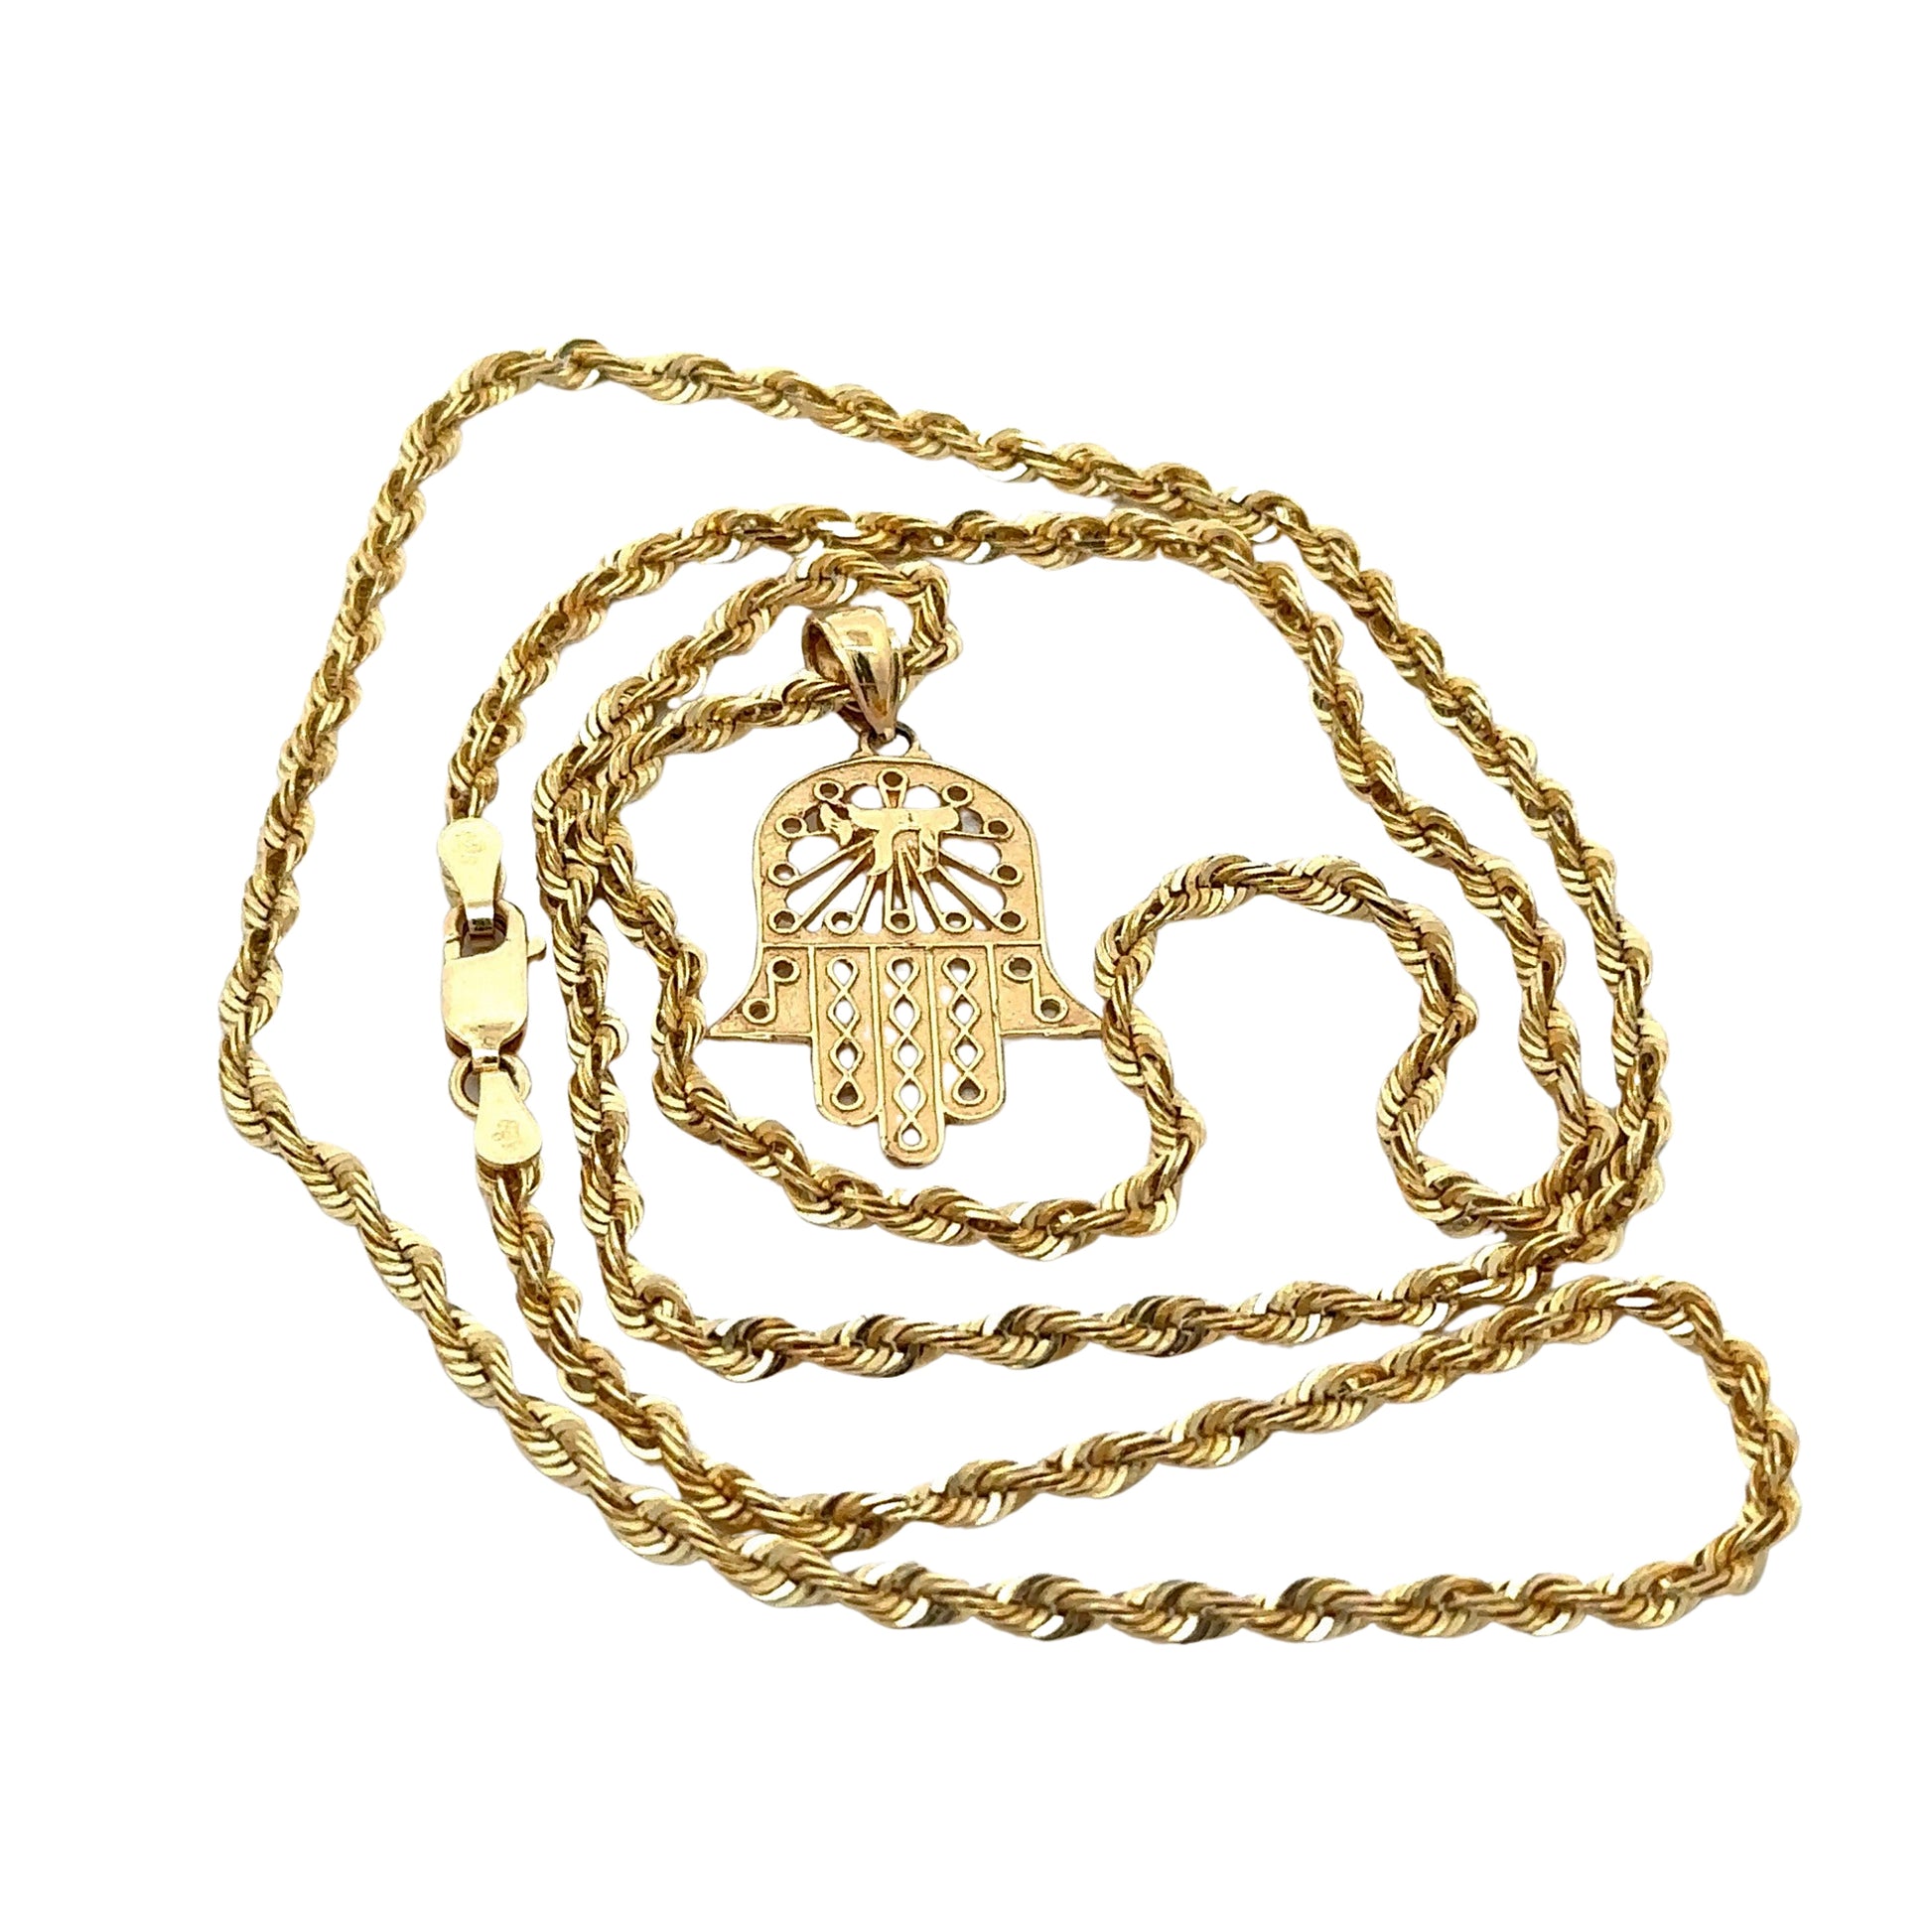 yellow gold rope chain with yellow gold hamsa pendant